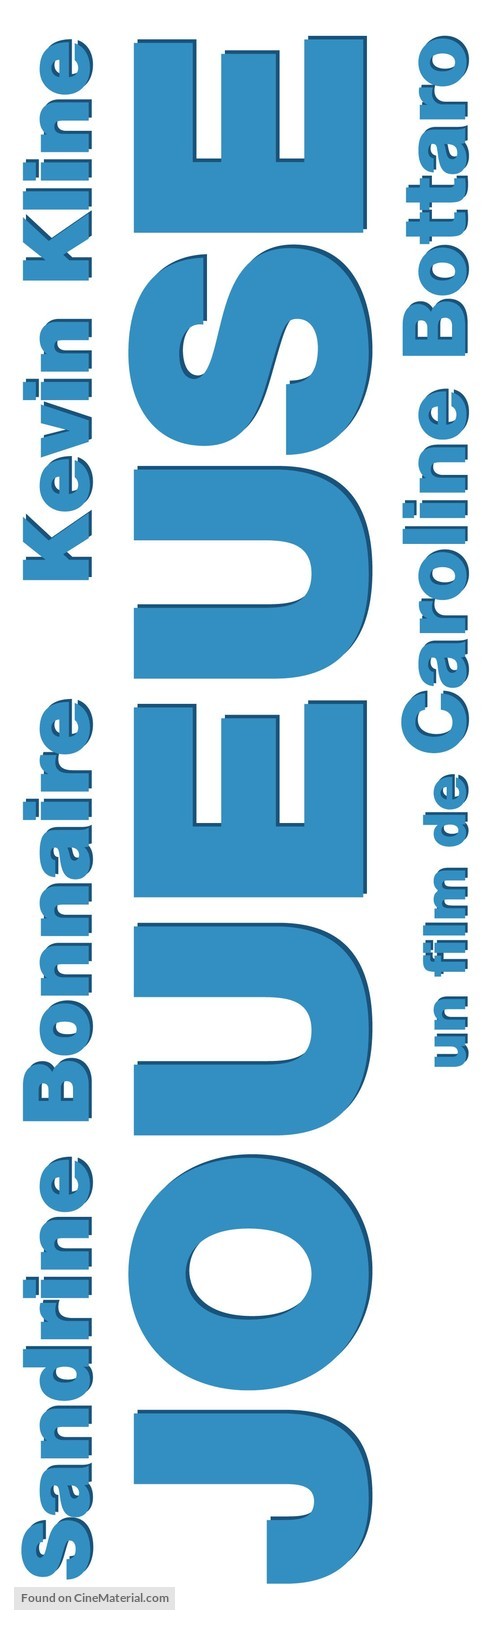 Joueuse - French Logo